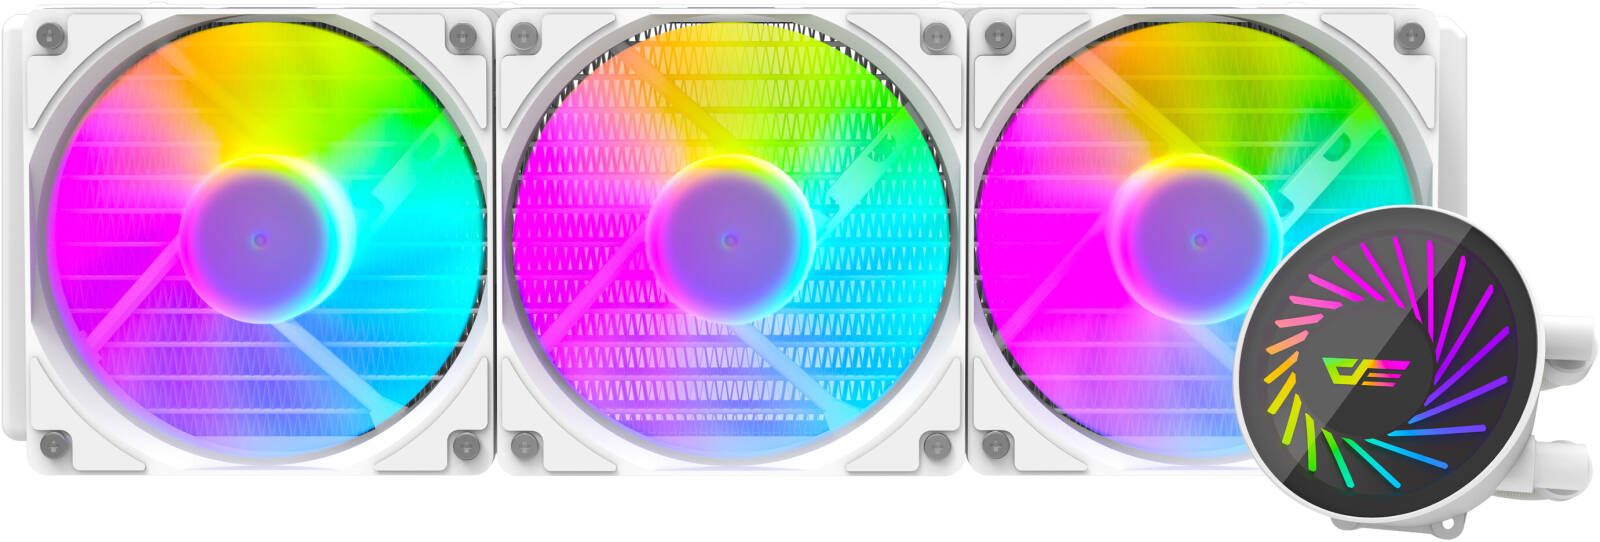 DarkFlash RADIANT DC-360 RGB Liquid CPU Cooler, 360mm Radiator, 120mm RGB Fan, 800~2000 rpm Fan Speed, 84.2CFM Airflow, Supports ARGB Light Sync, Support Intel & AMD Sockets, | DCS-360-RGB